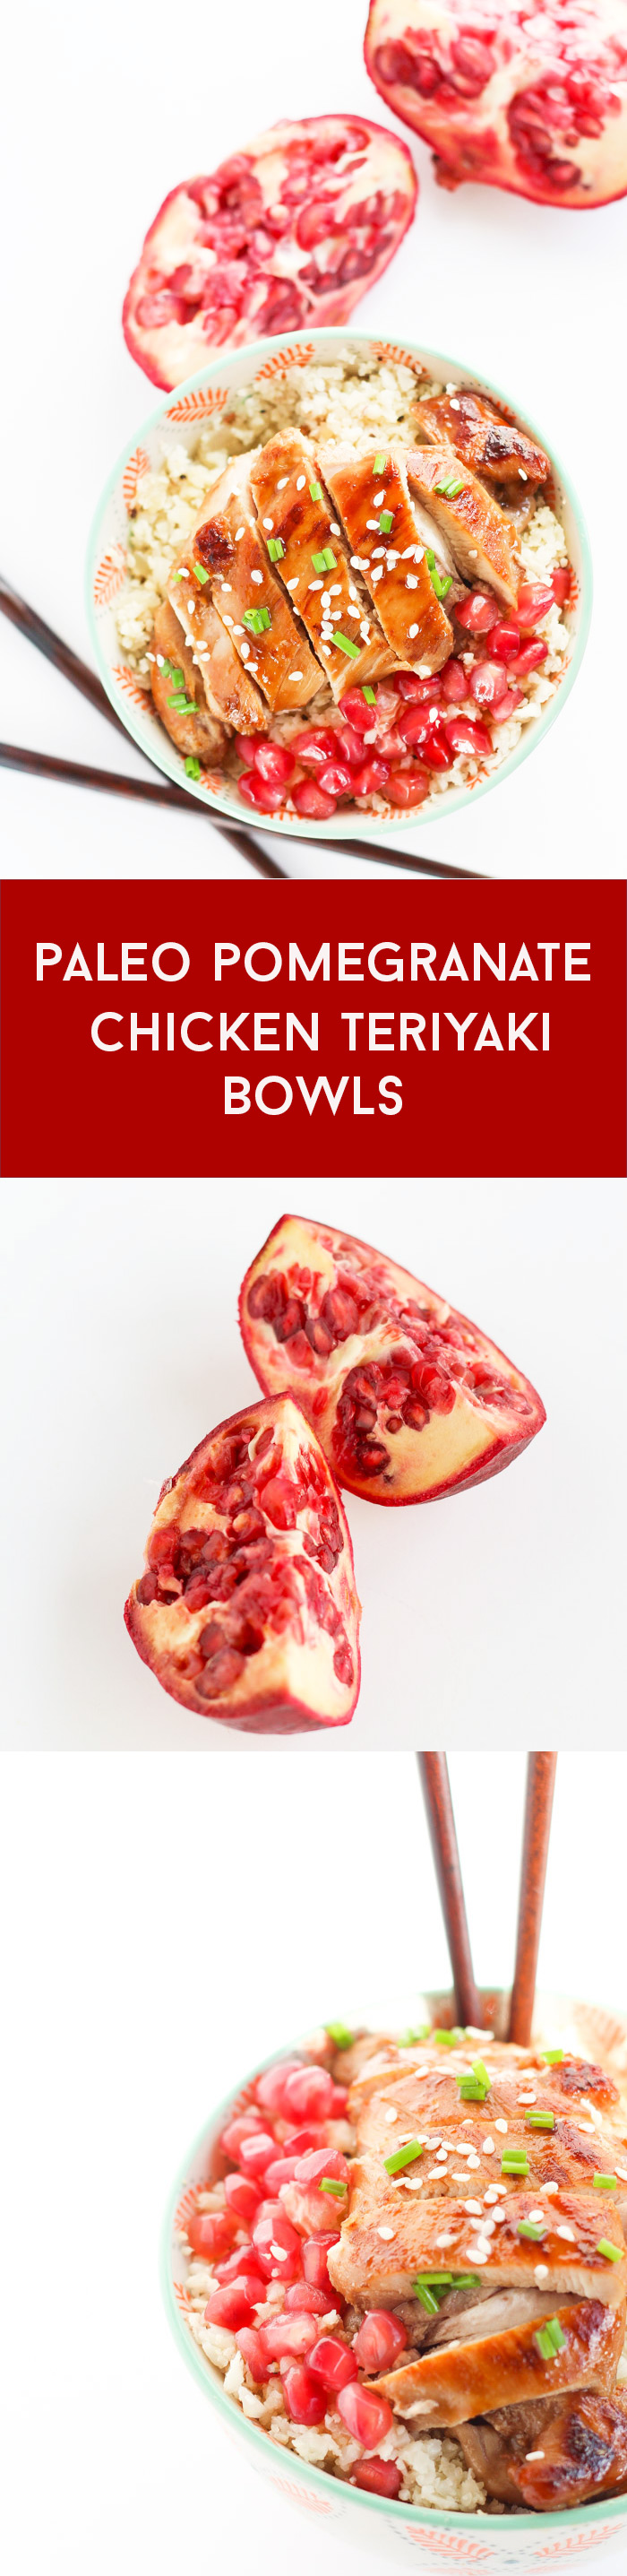 Homemade chicken teriyaki bowls with a twist! #paleo